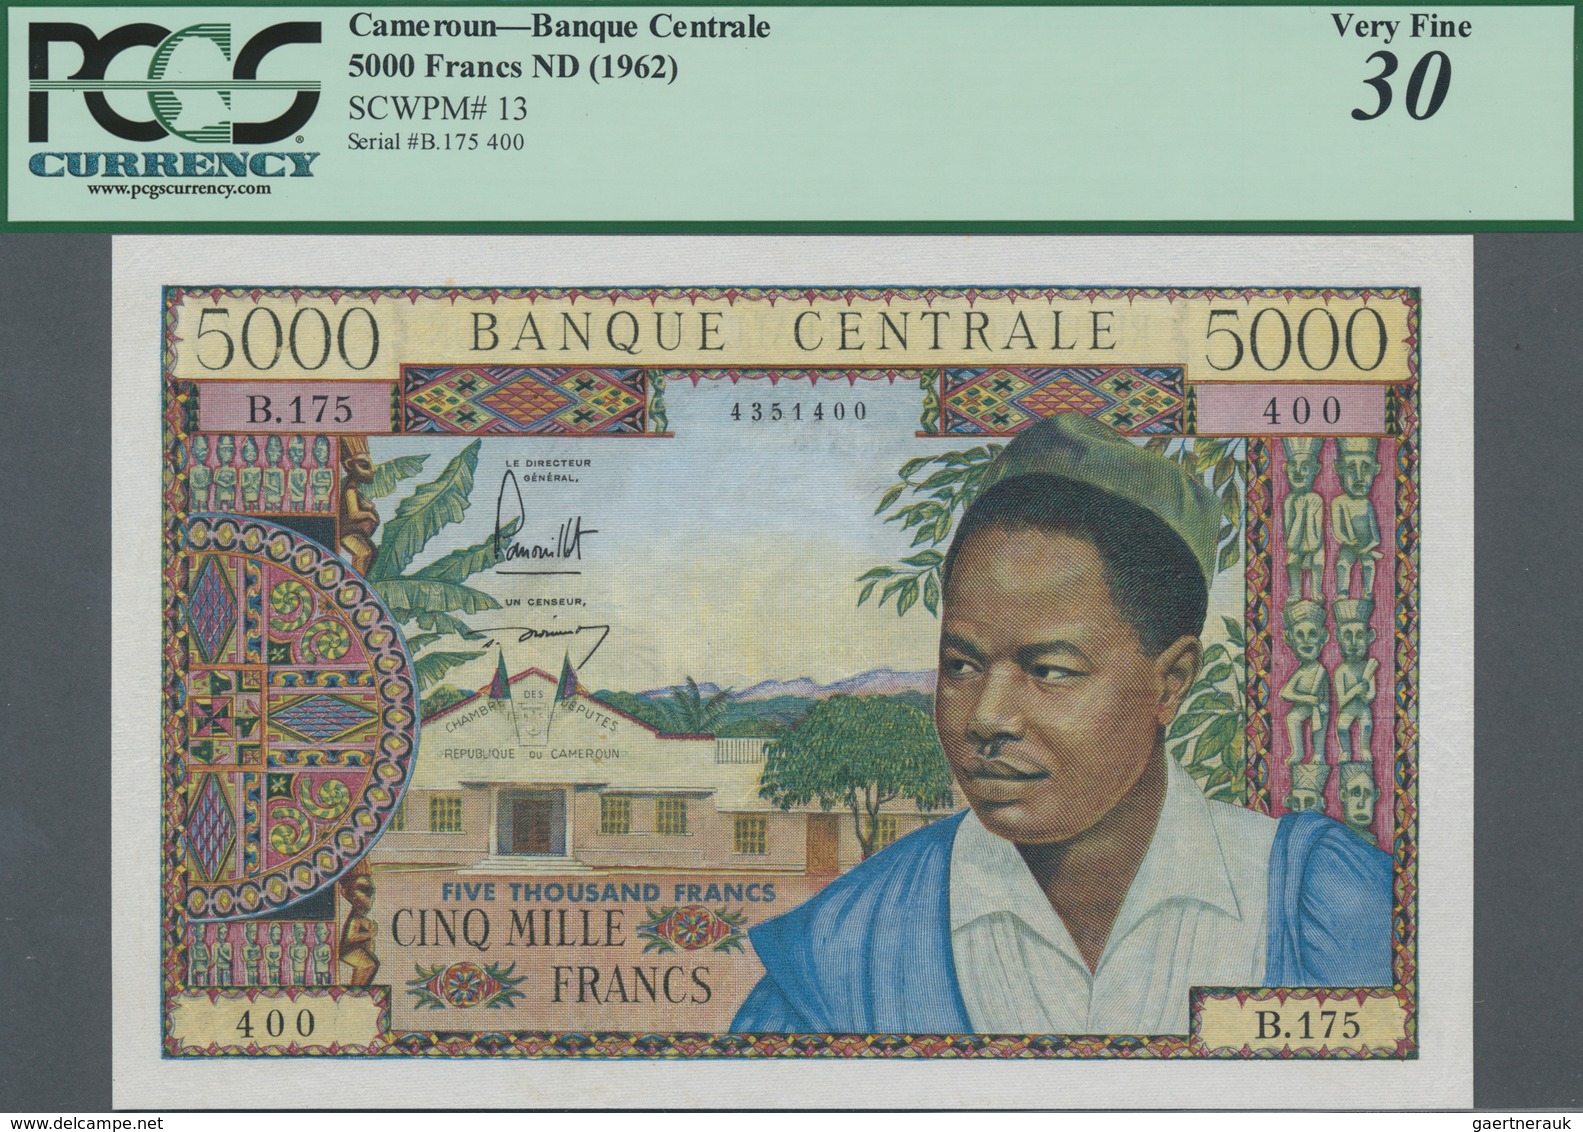 Cameroon / Kamerun: République Fédérale Du Cameroun 5000 Francs ND(1962), P.13, Very Popular Banknot - Cameroun